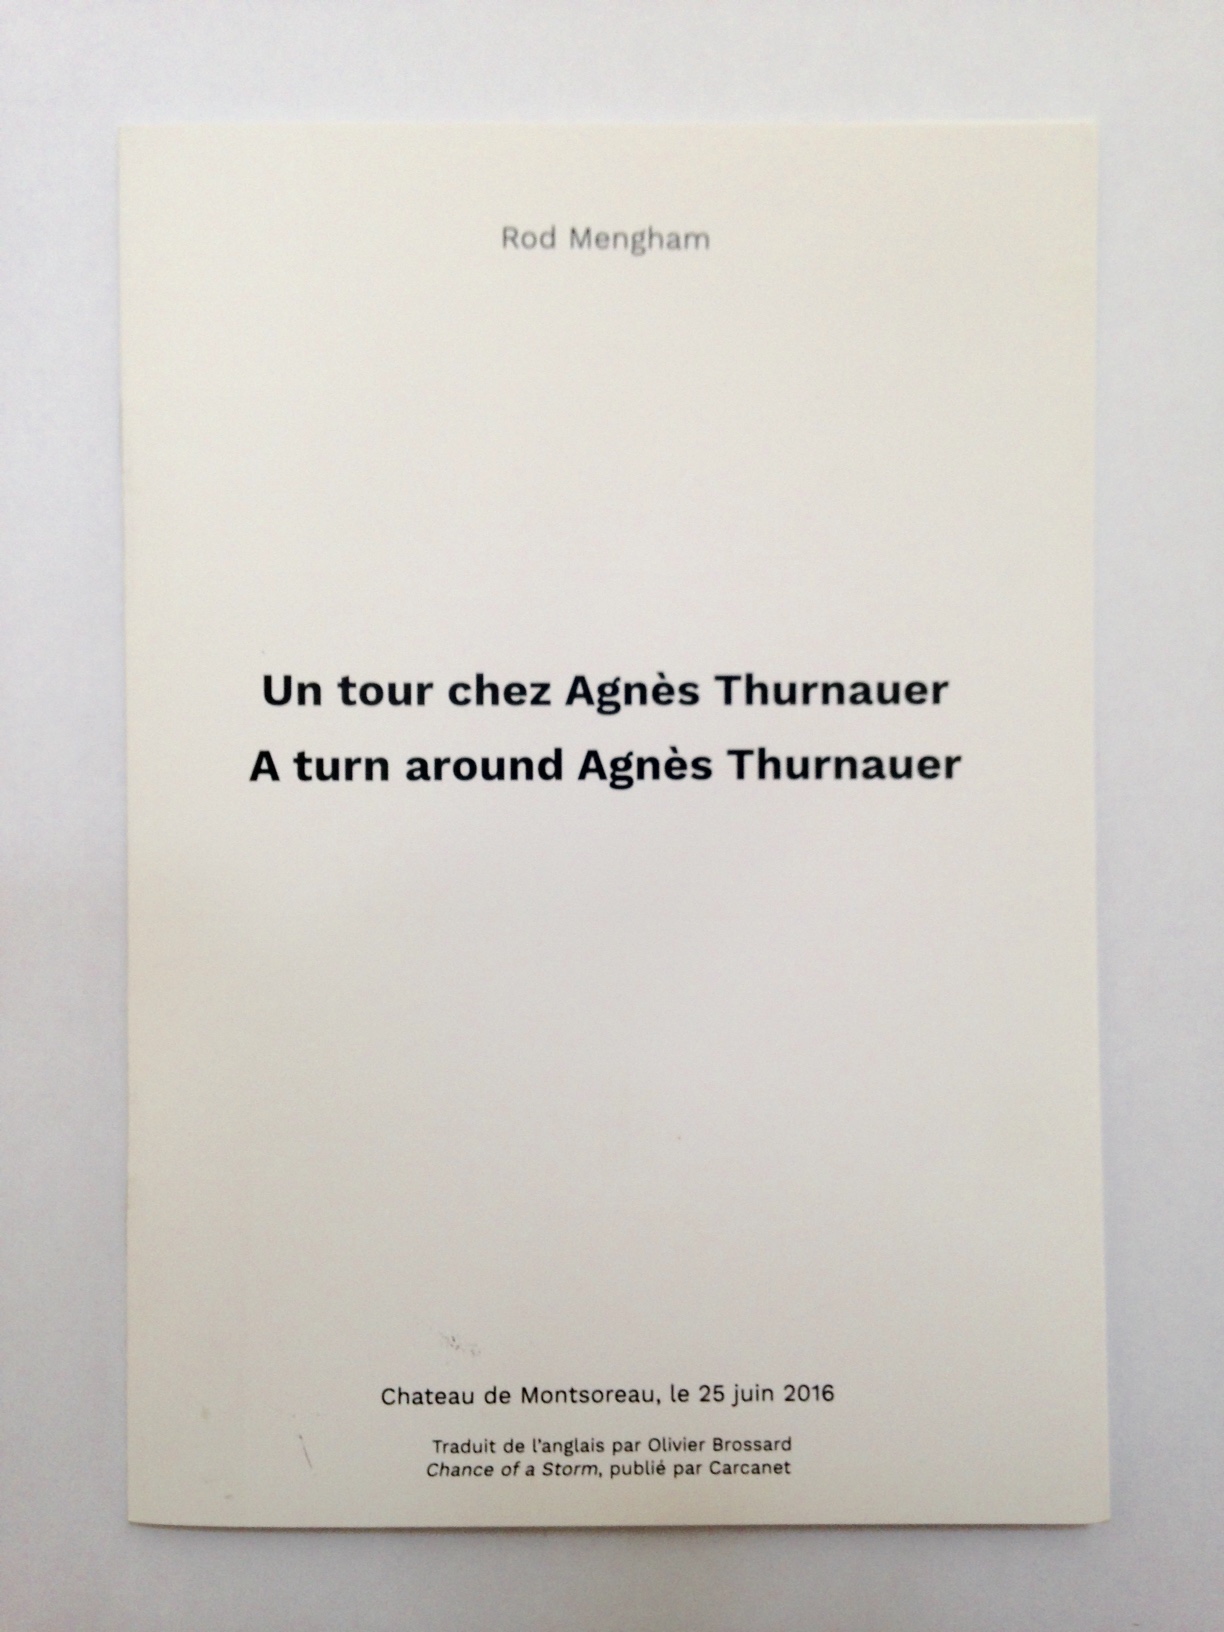 Representation of A turn around Agnès Thurnauer